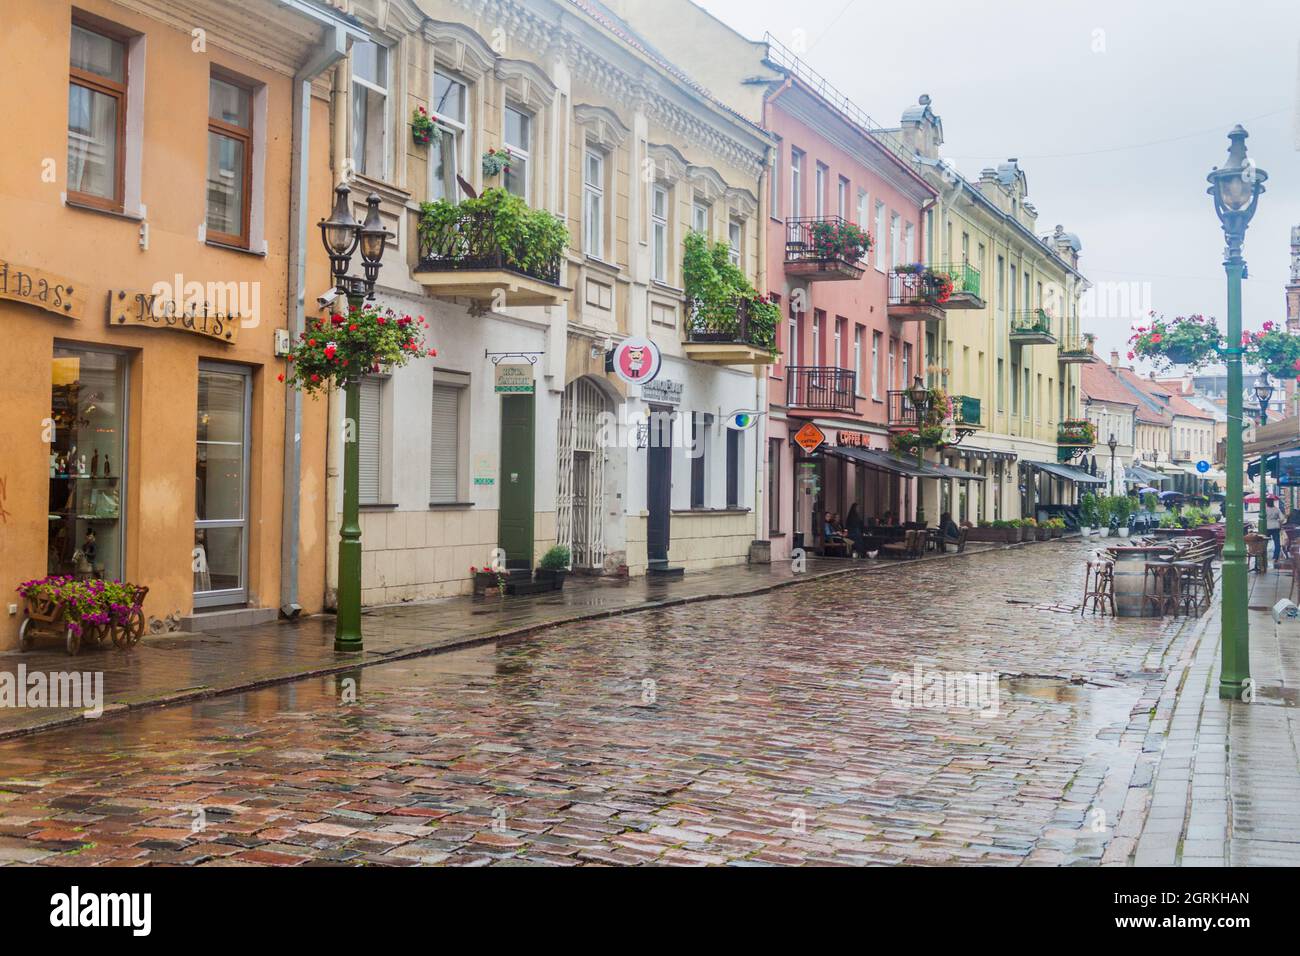 KAUNAS, LITHUANIA - AUGUST 16, 2016: View of Vilniaus gatve street in Kaunas, Lithuania Stock Photo